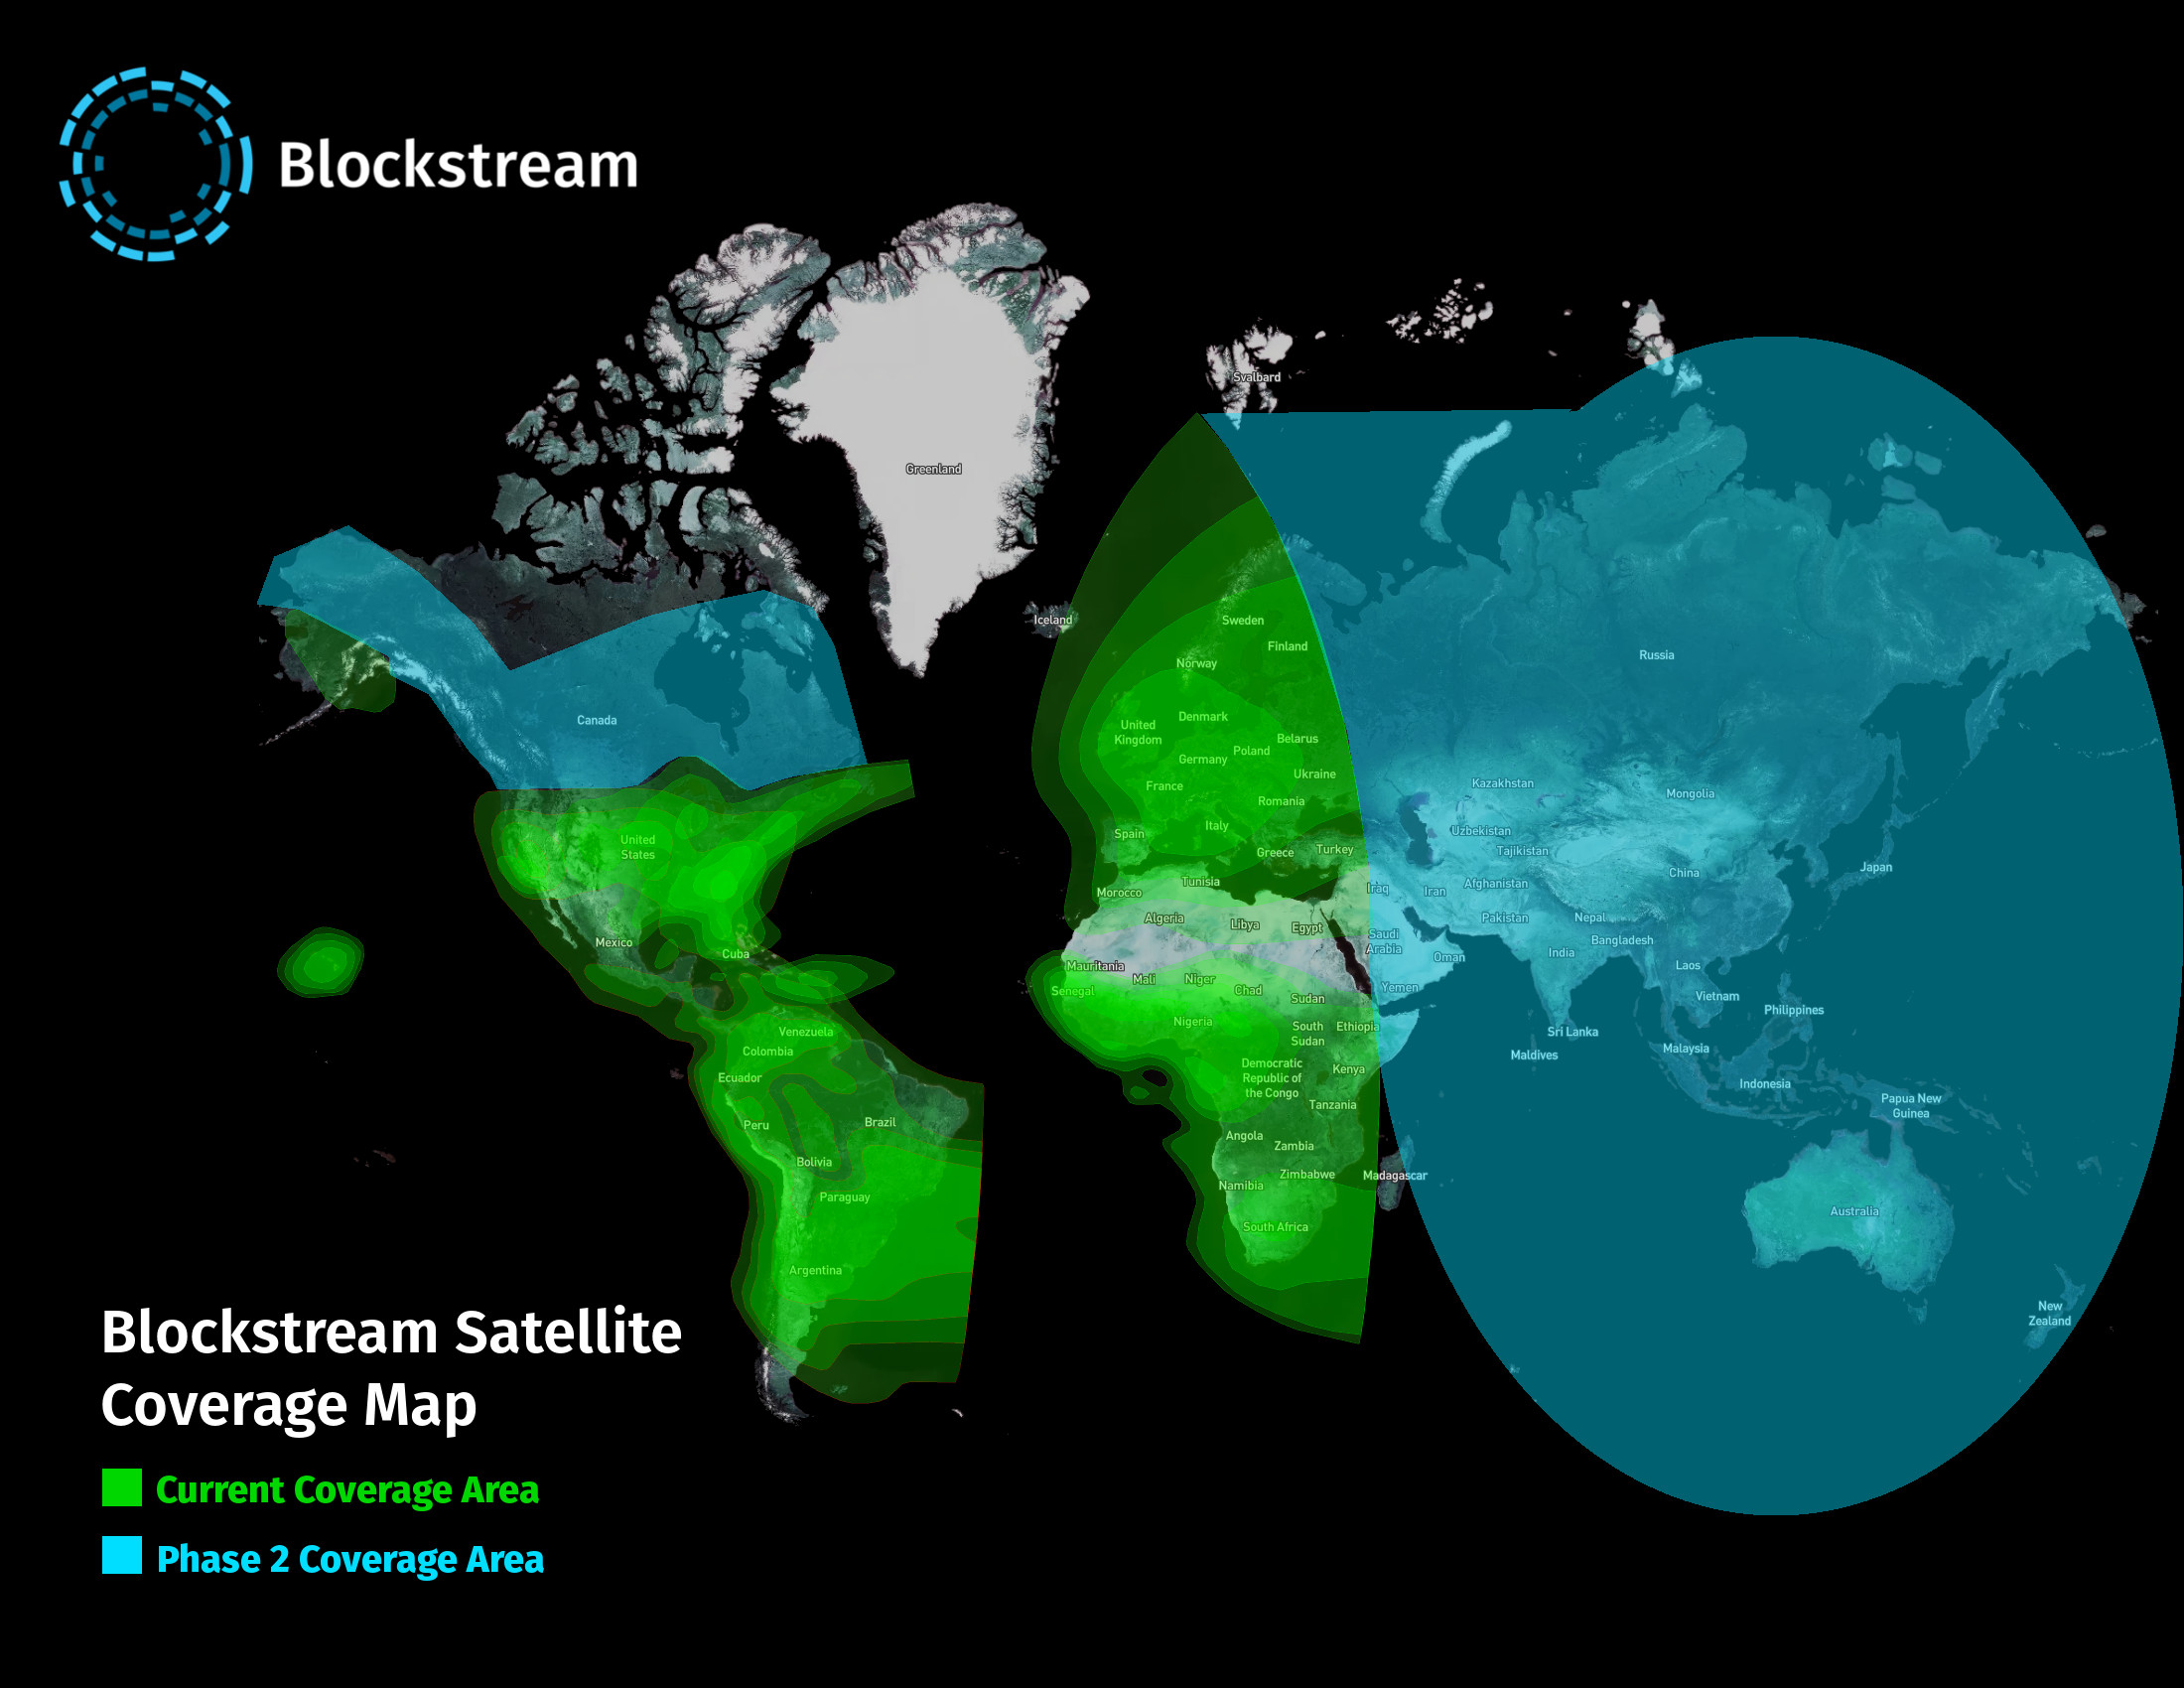 Blockstream_Satellite_Phase12_Coverage_Areas.jpg